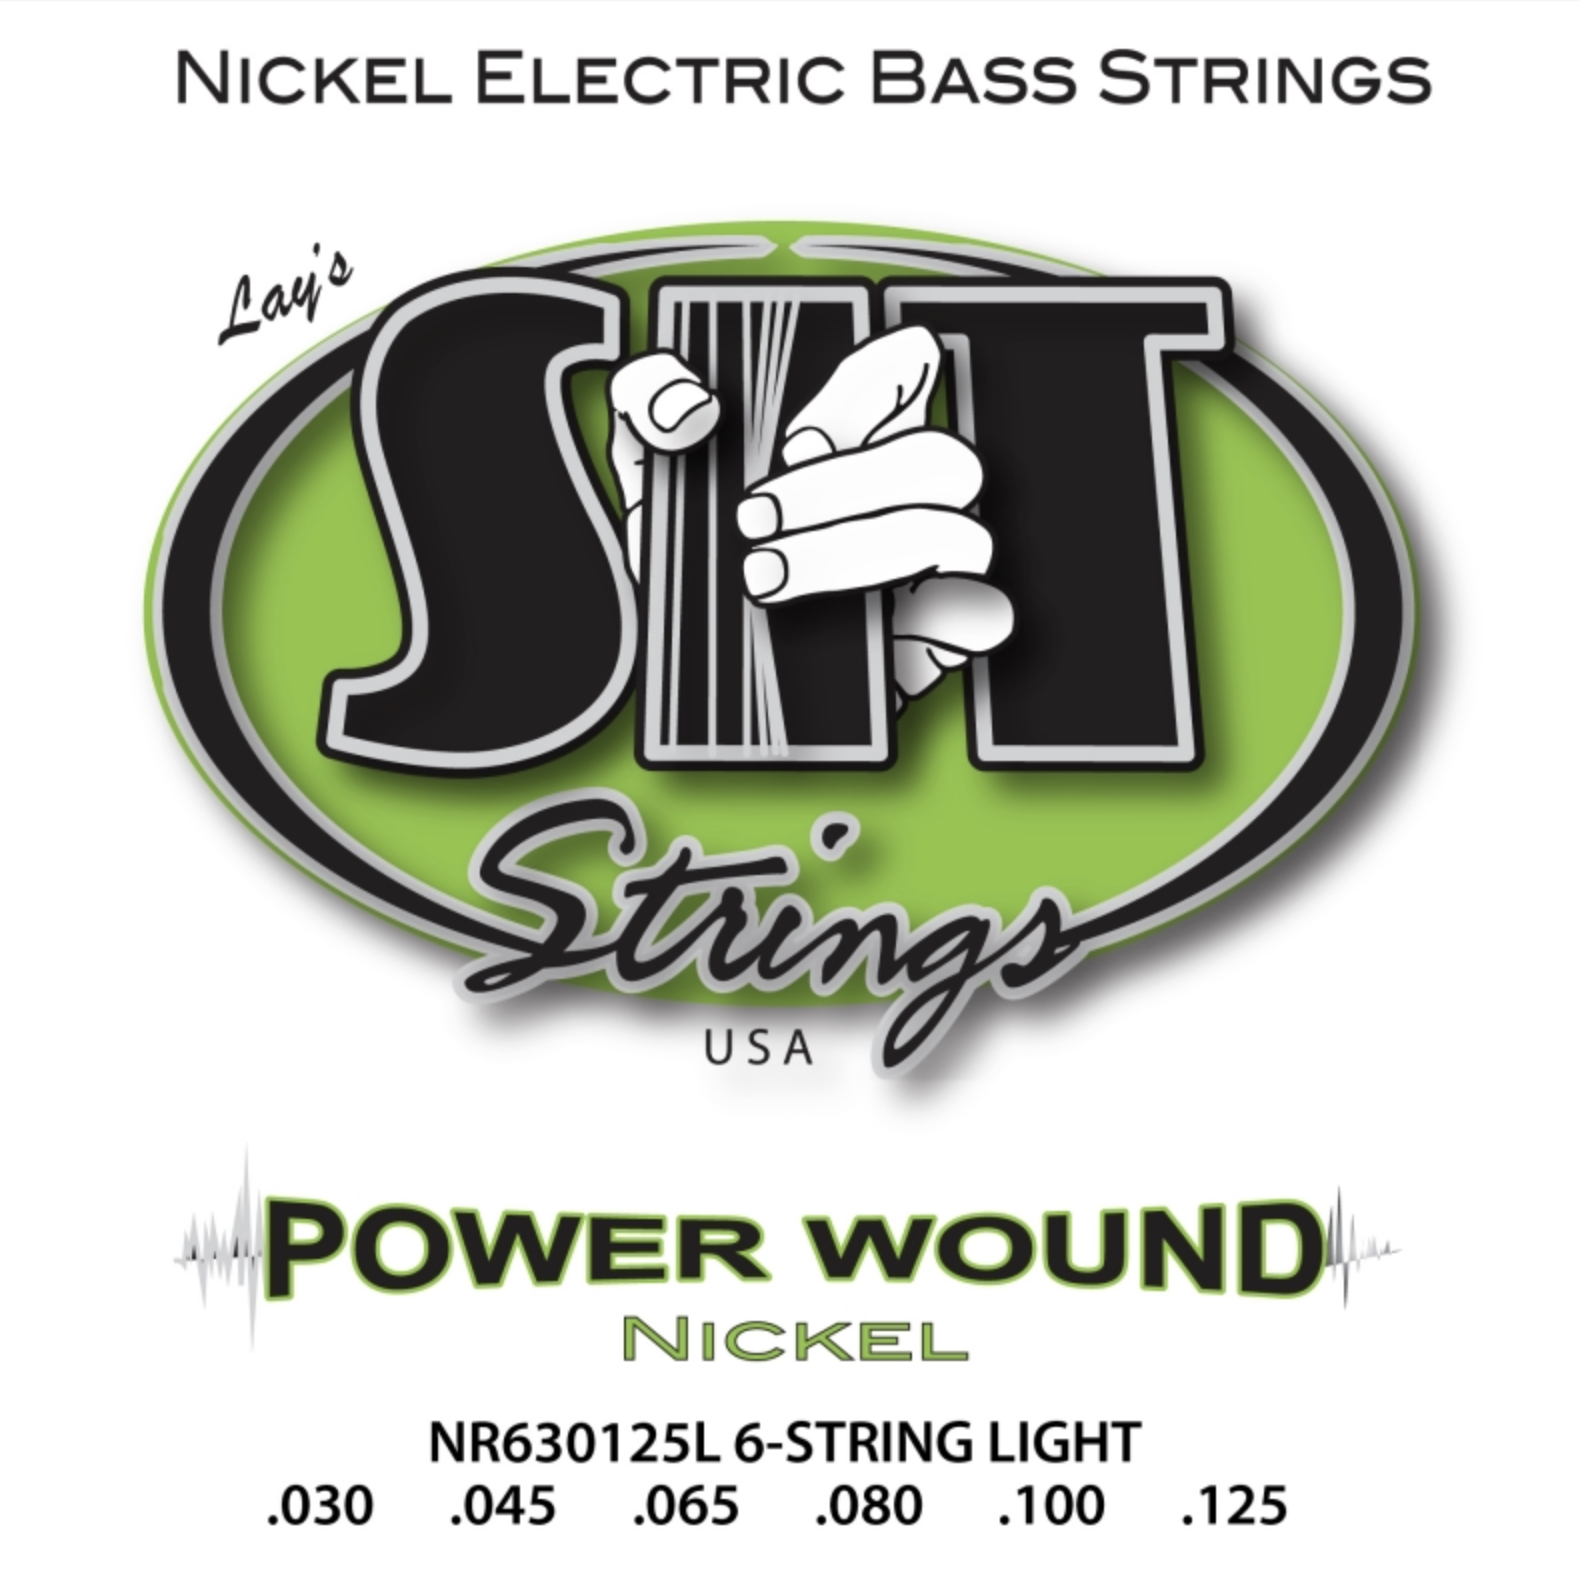 S.I.T. Strings Powerwound Nickel Bass 6-String Light-1